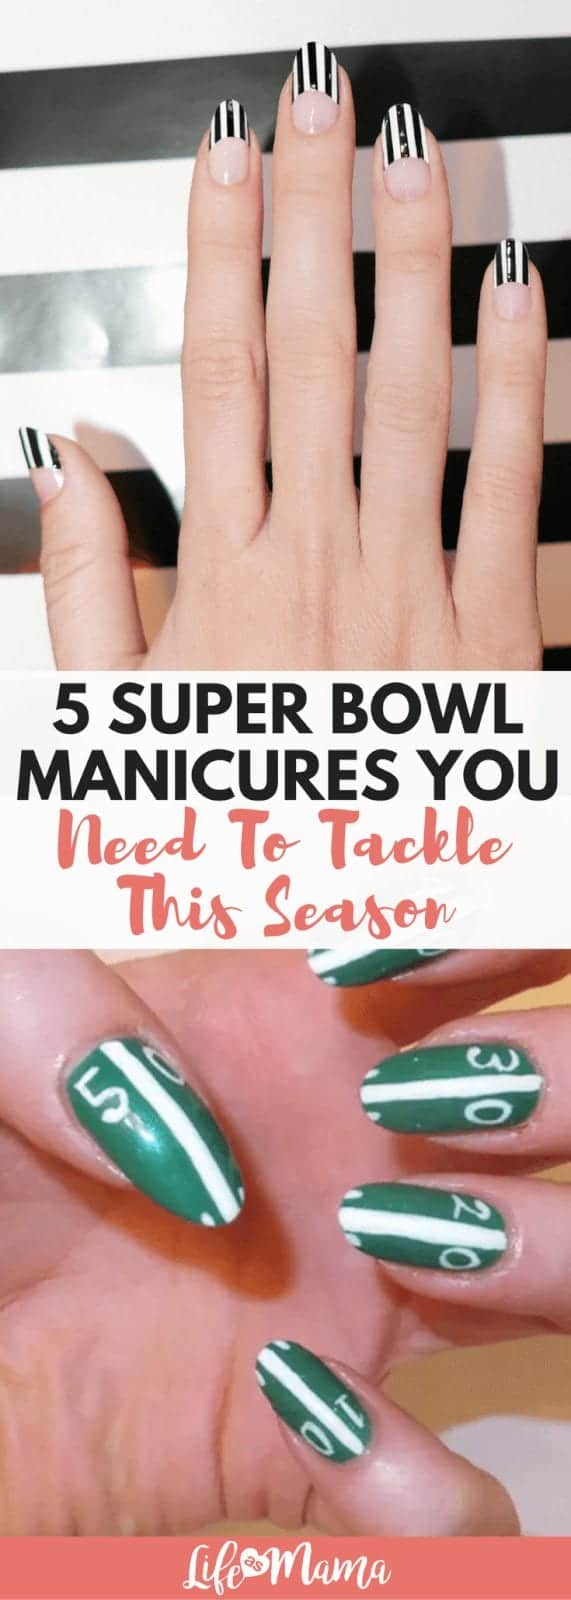 super bowl manicures